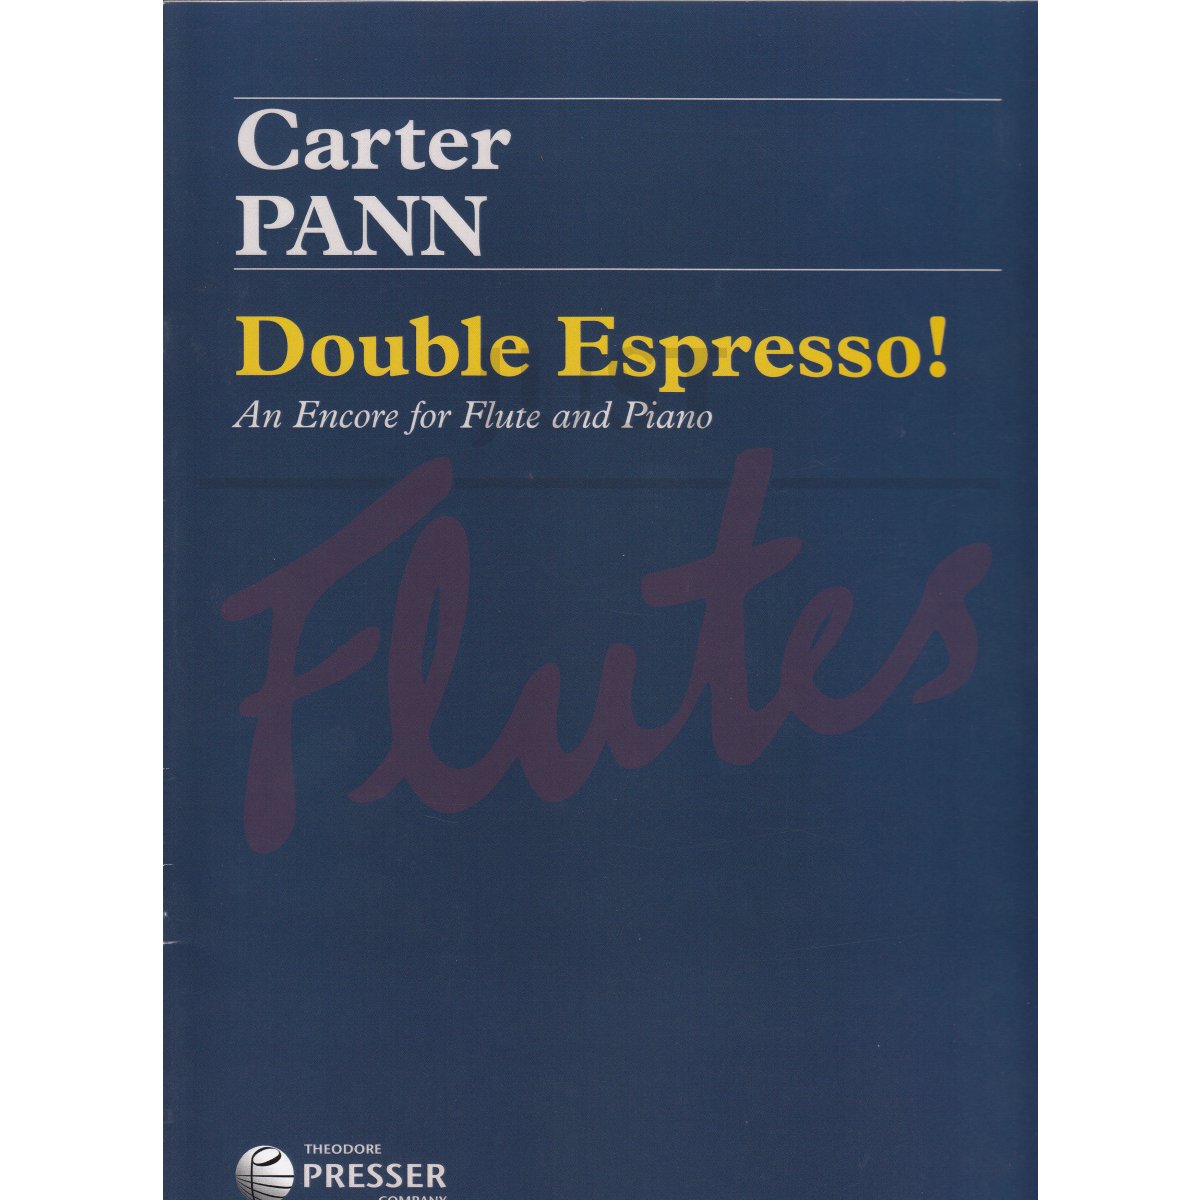 Double Espresso! - an Encore for Flute and Piano